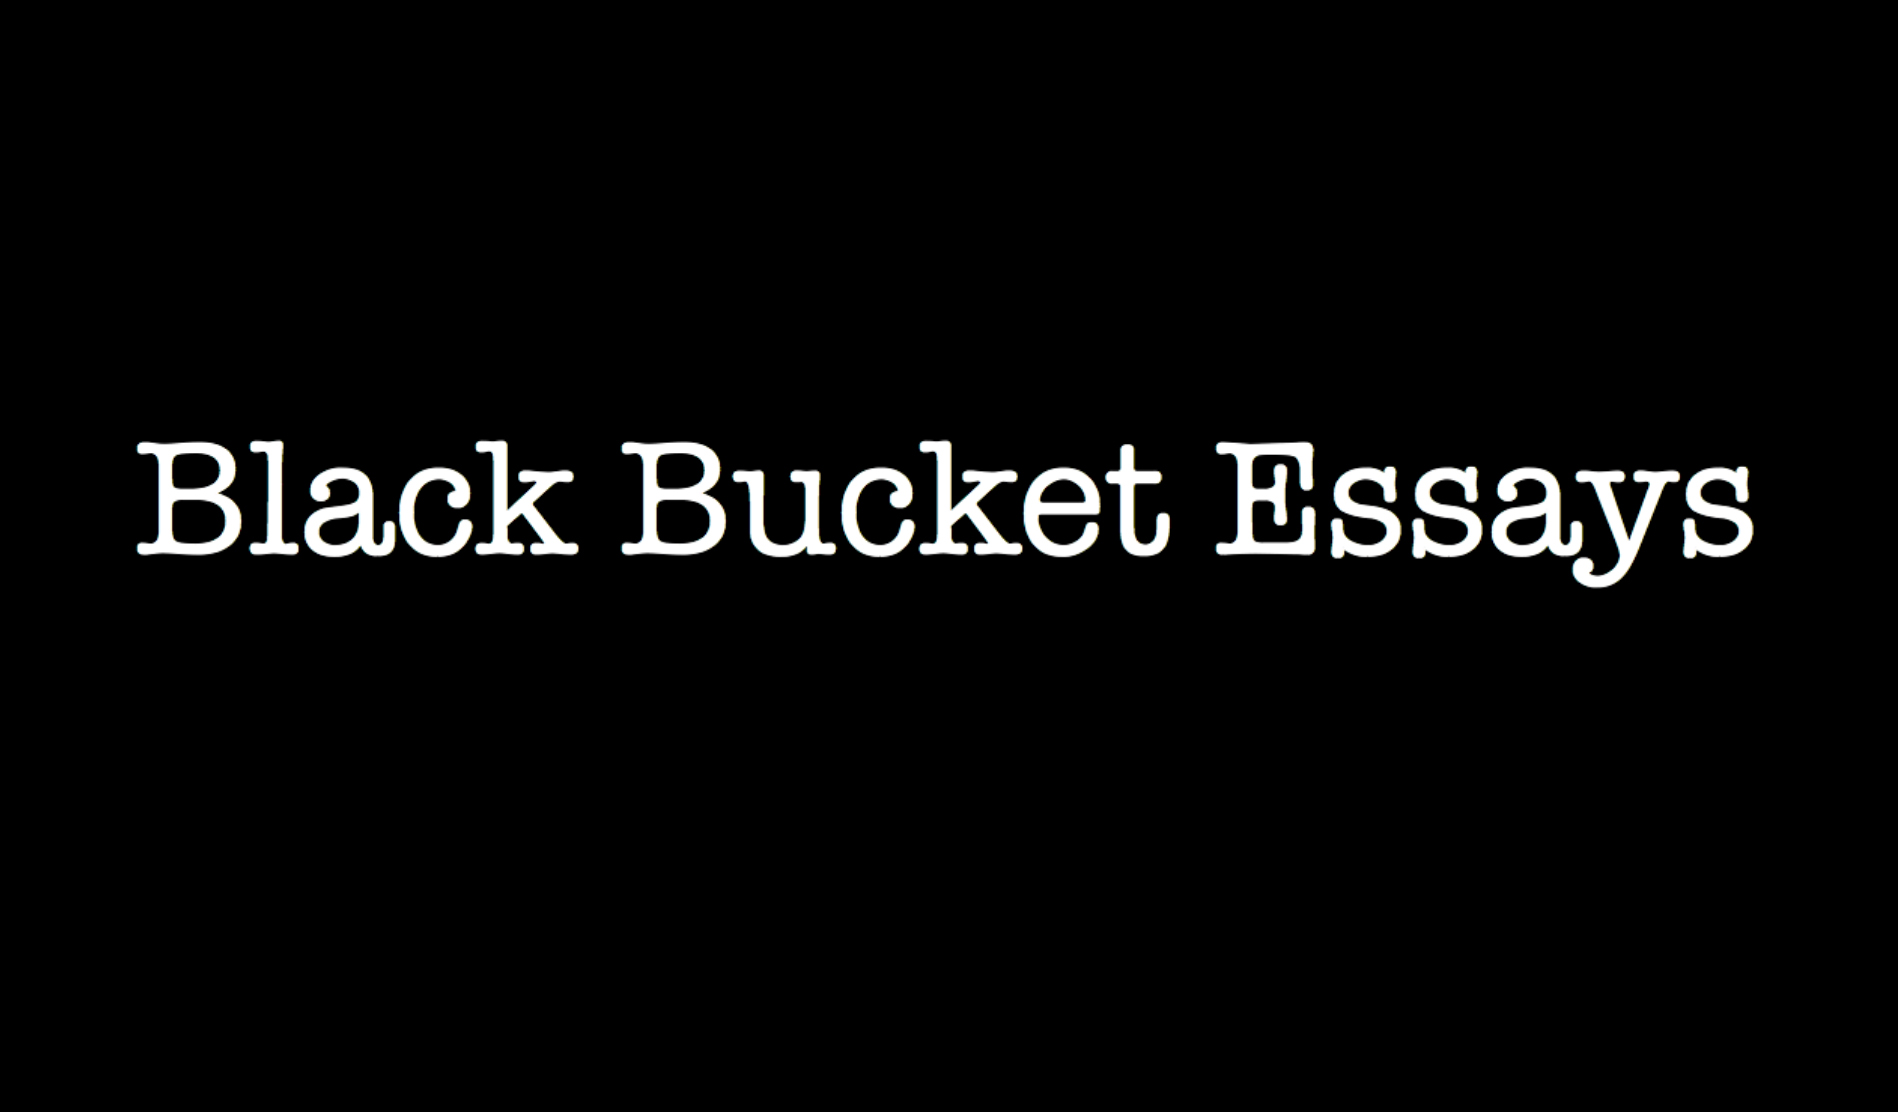 Black Bucket Essays